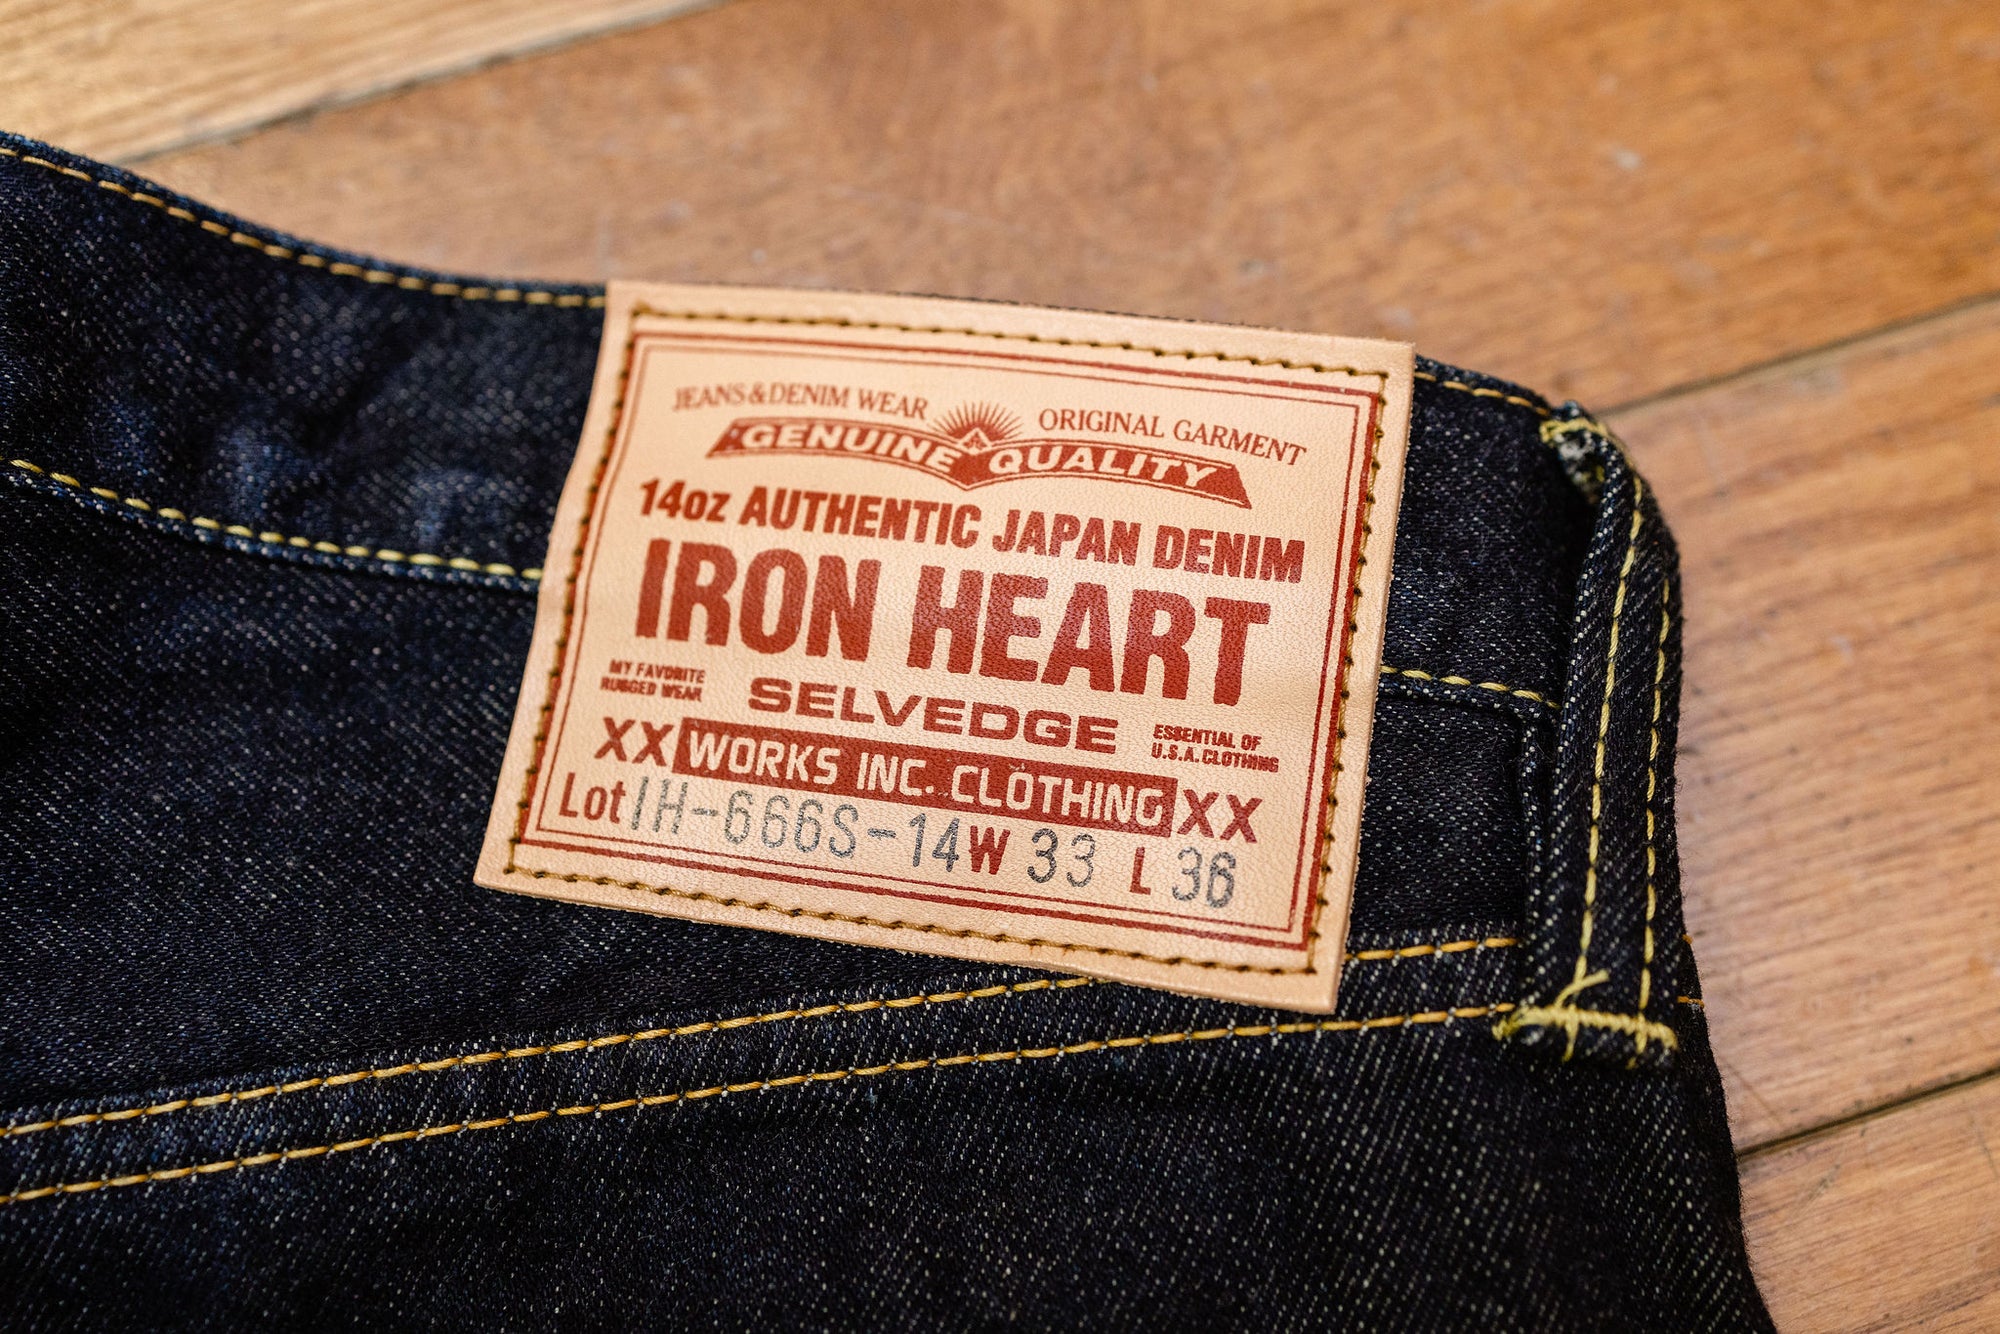 Iron Heart 666-142 Bb Slim Straight Cut Jeans